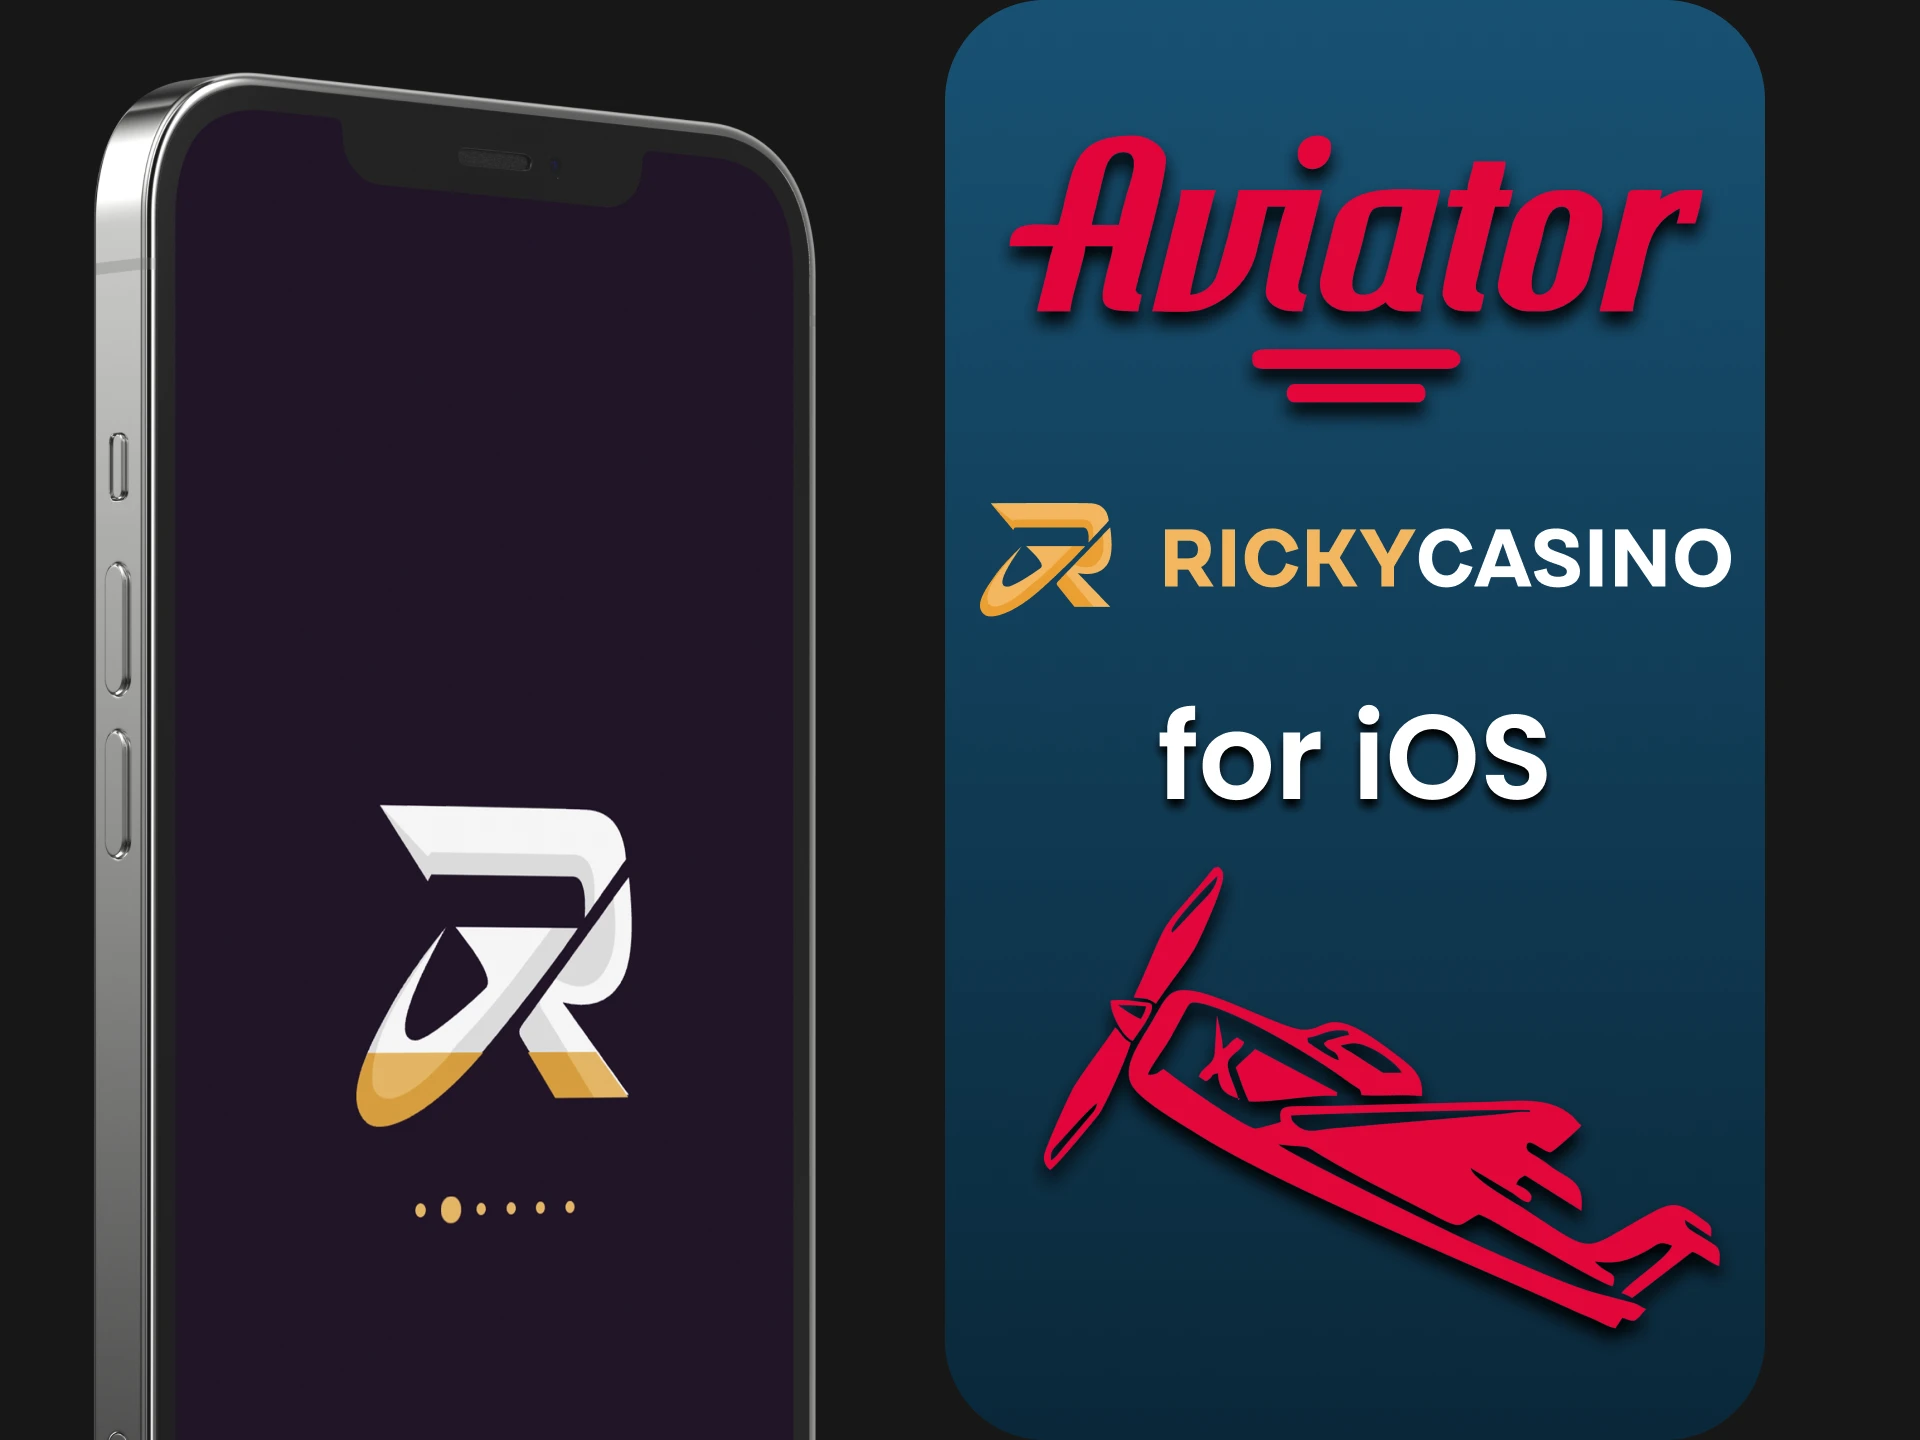 Install the Ricky Casino app to play Aviator on iOS.